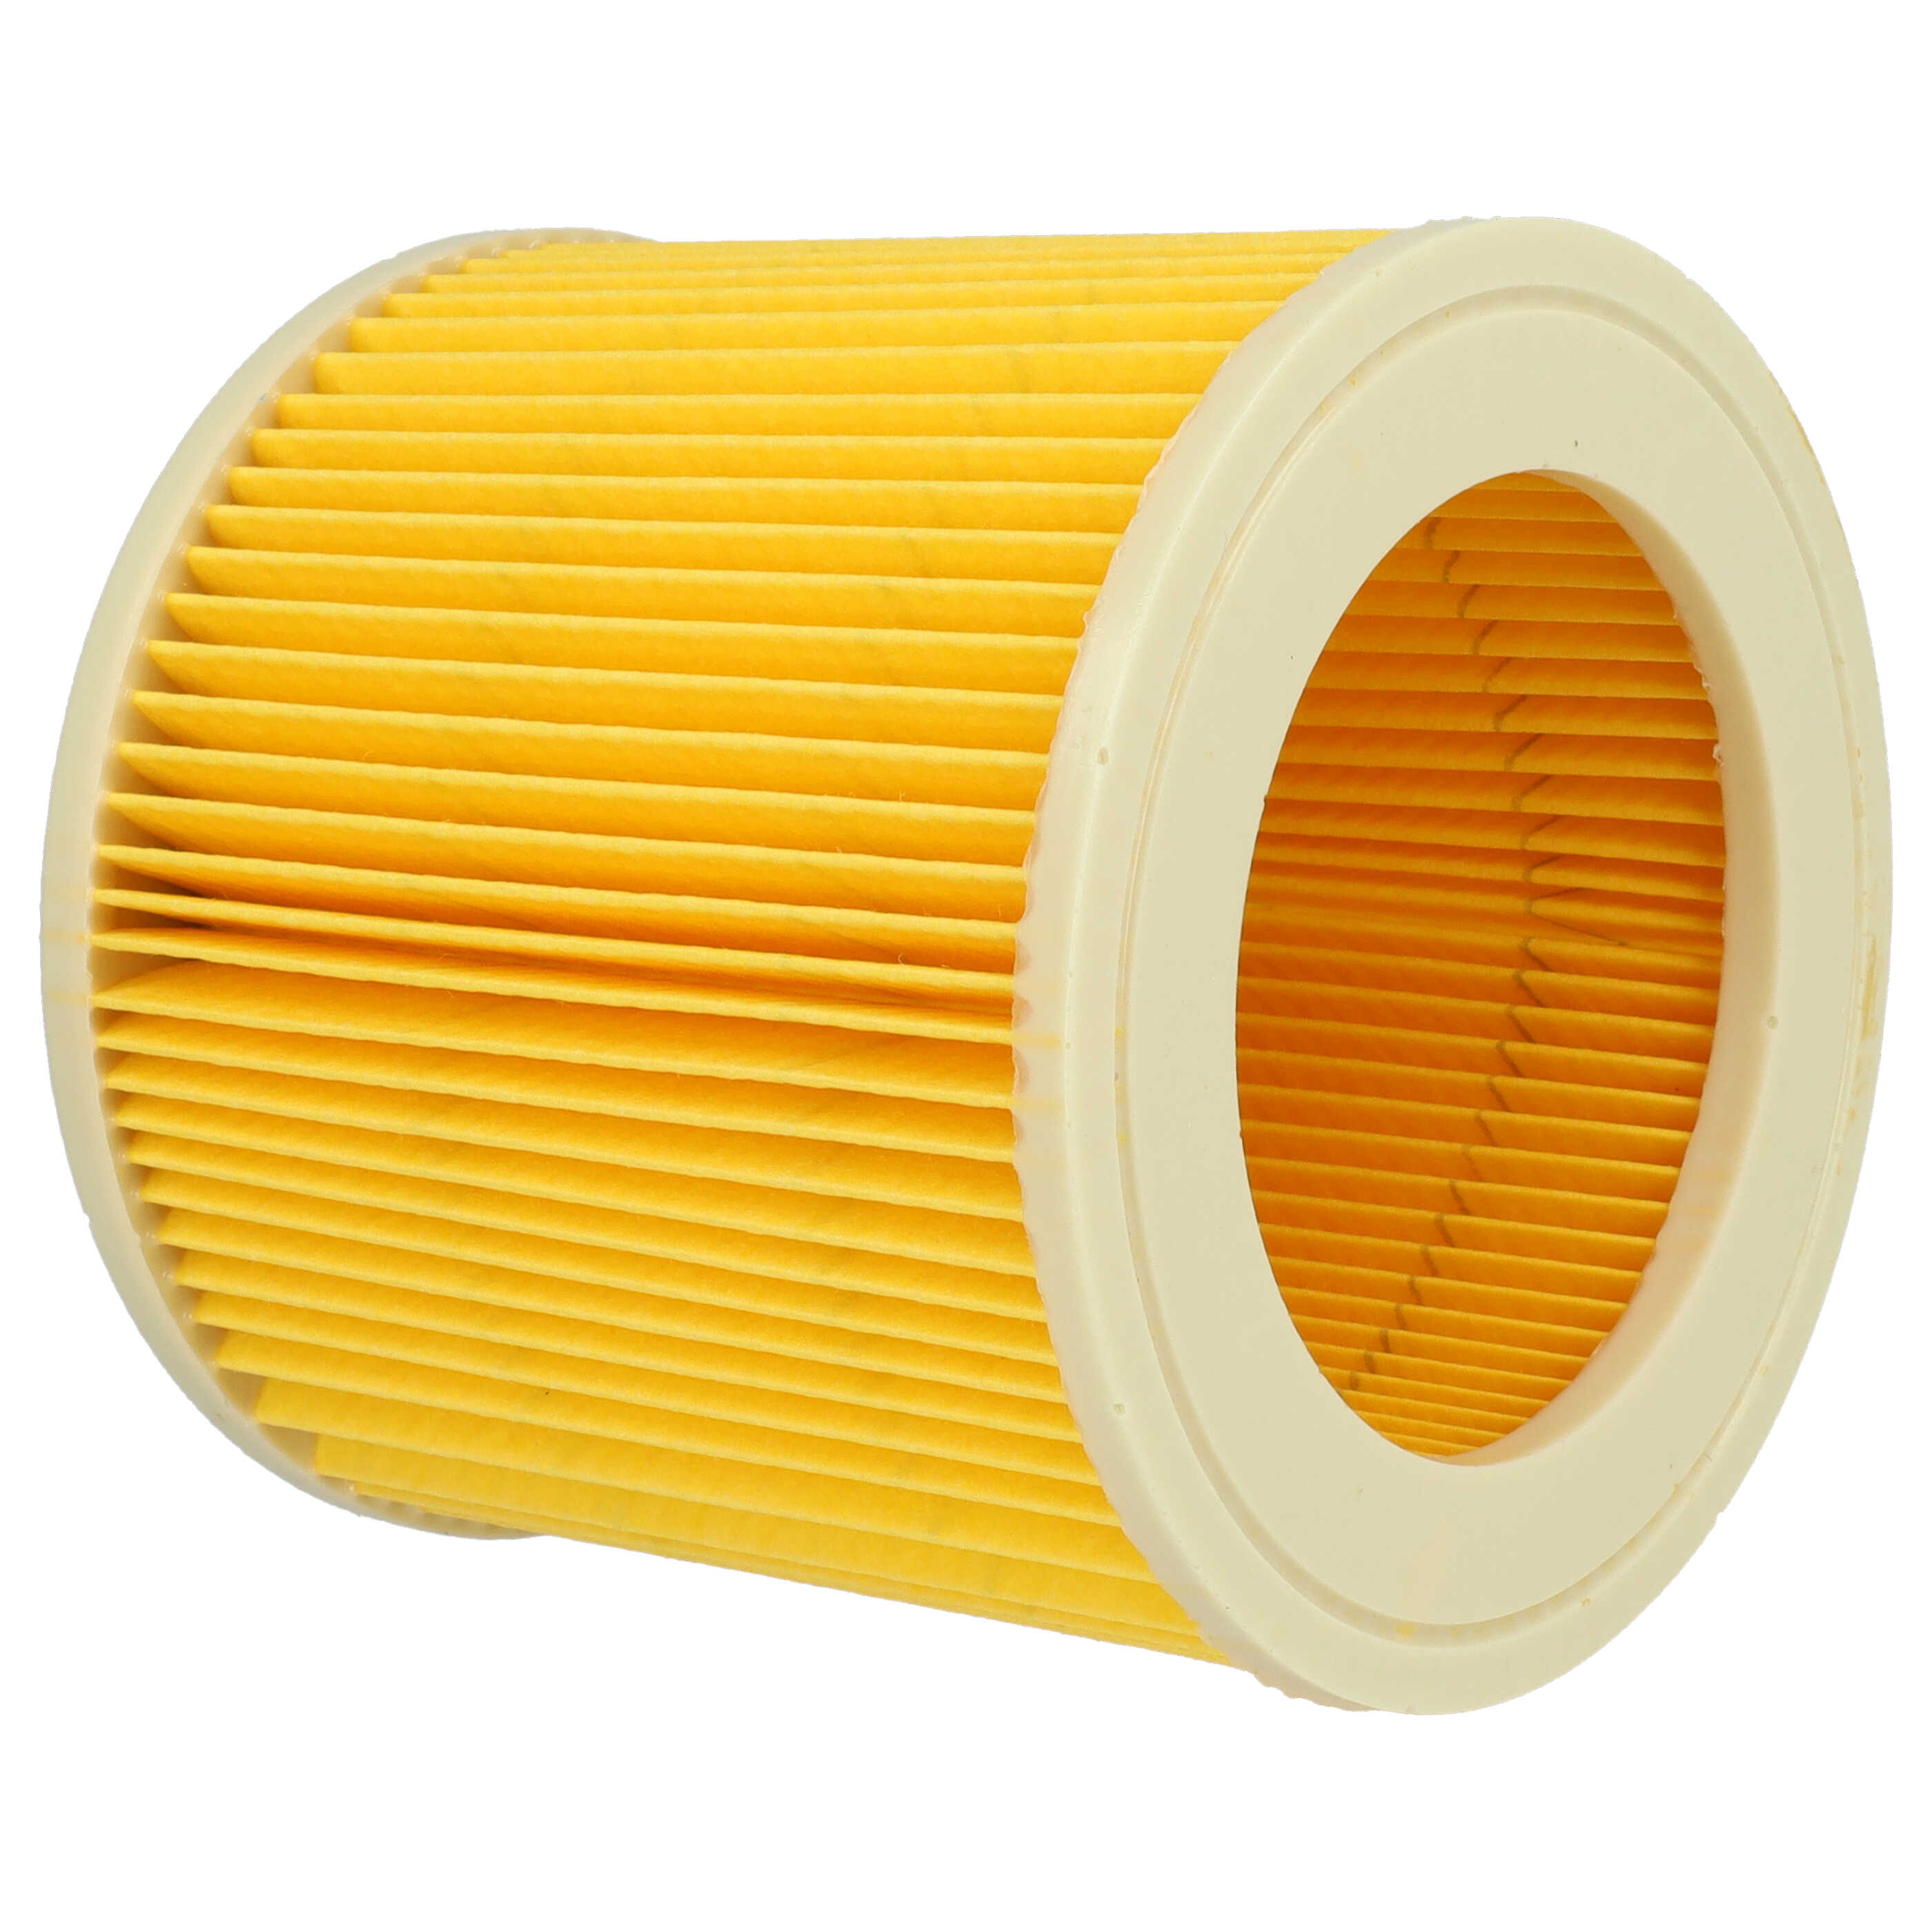 10x Filtro reemplaza Kärcher 2.863-303.0, 6.414-547.0 para aspiradora - filtro de cartucho, amarillo